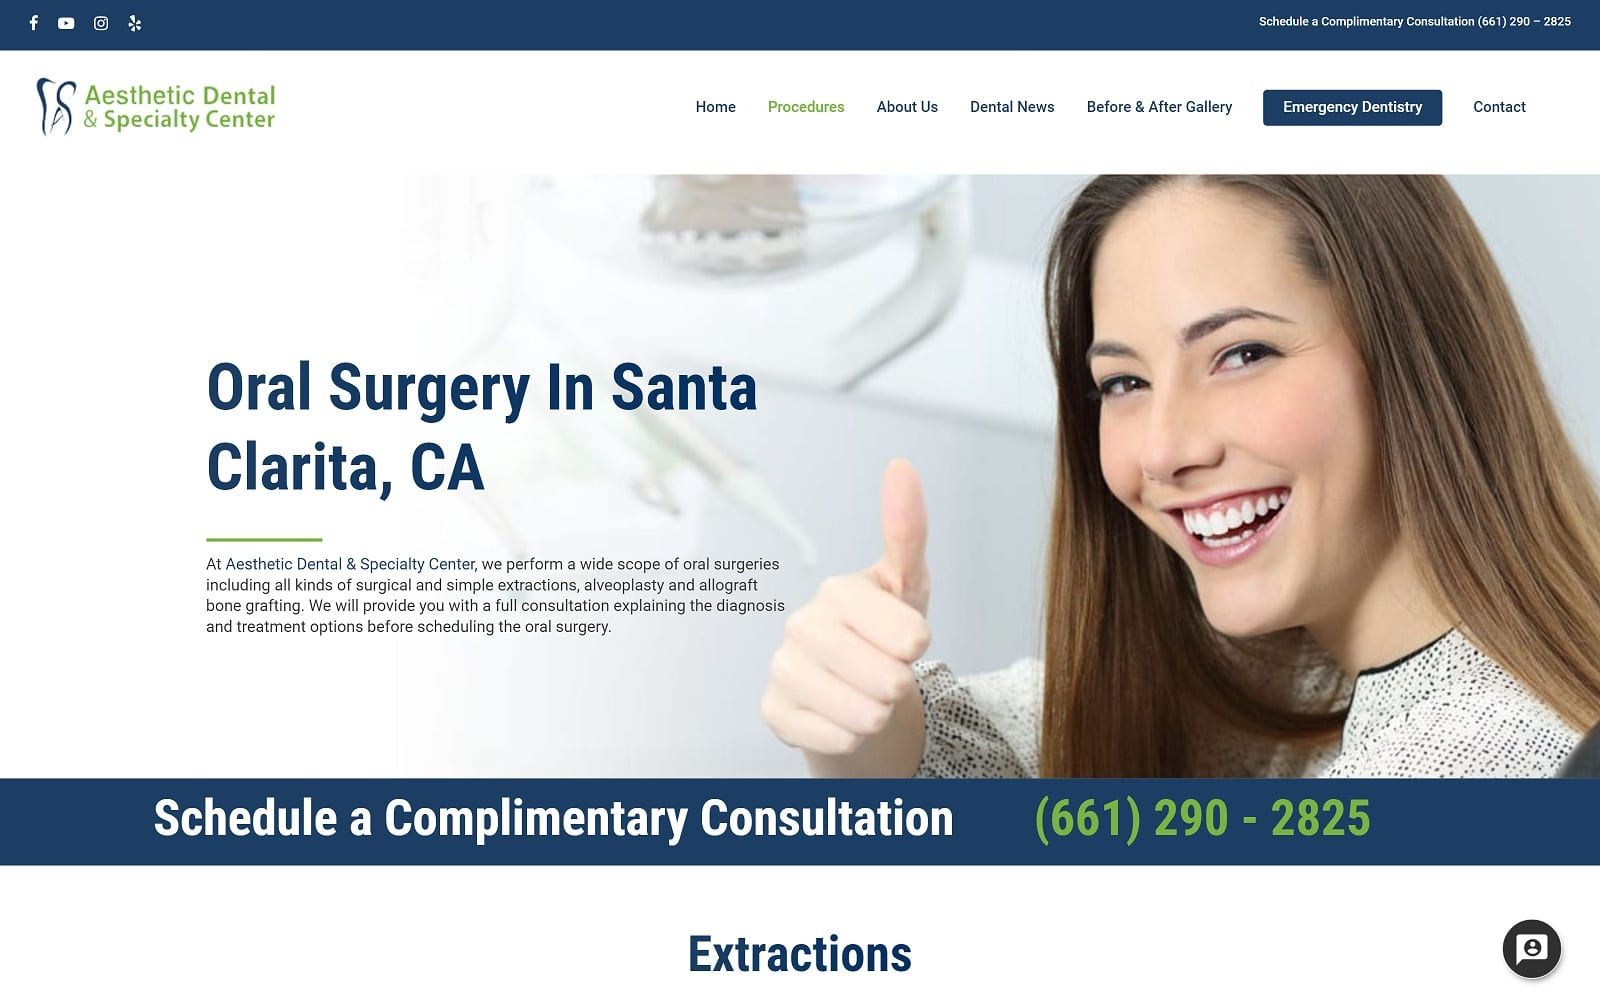 The screenshot of aesthetic dental & specialty center - santa clarita dentalscv. Com website